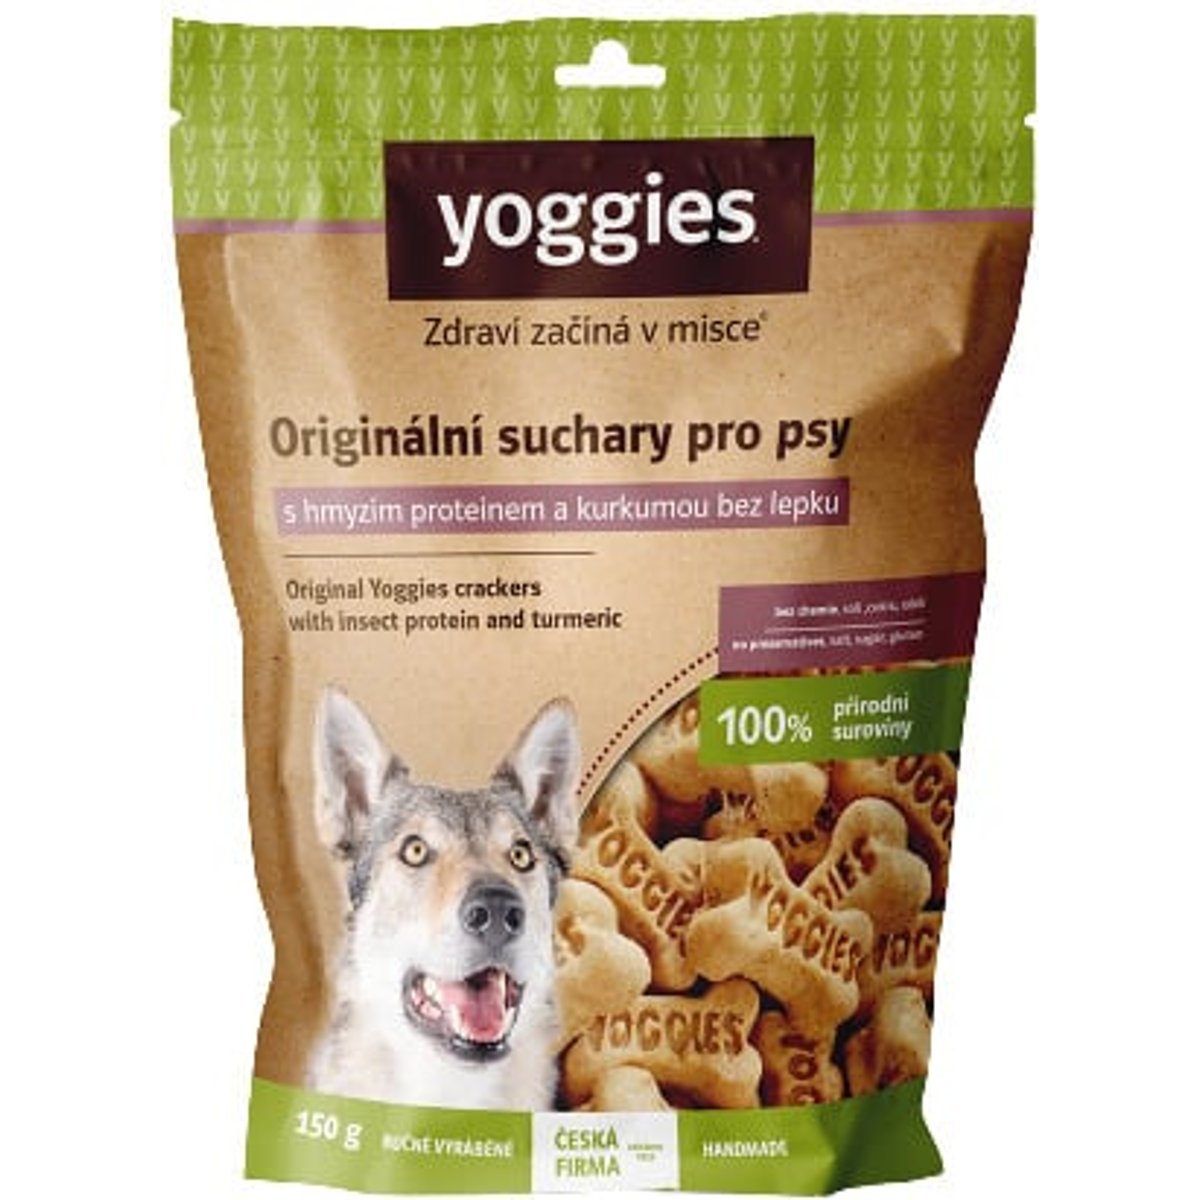 Yoggies Bezlepkové suchary s hmyzím proteinem a kurkumou pro psy